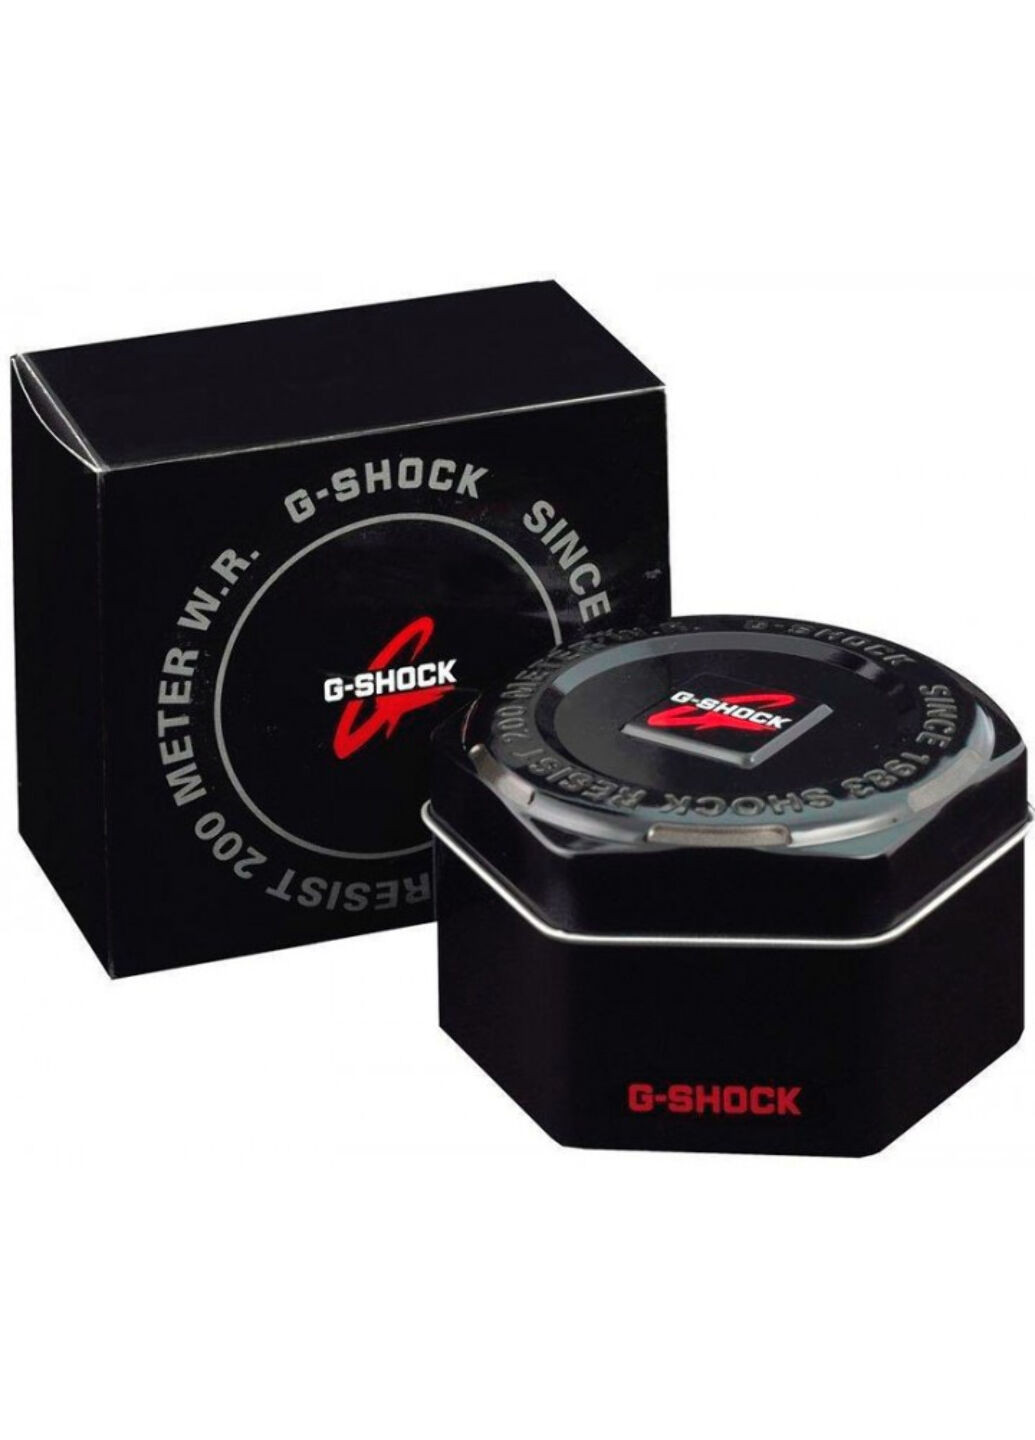 Часы наручные Casio glx-s5600-7er (260030921)